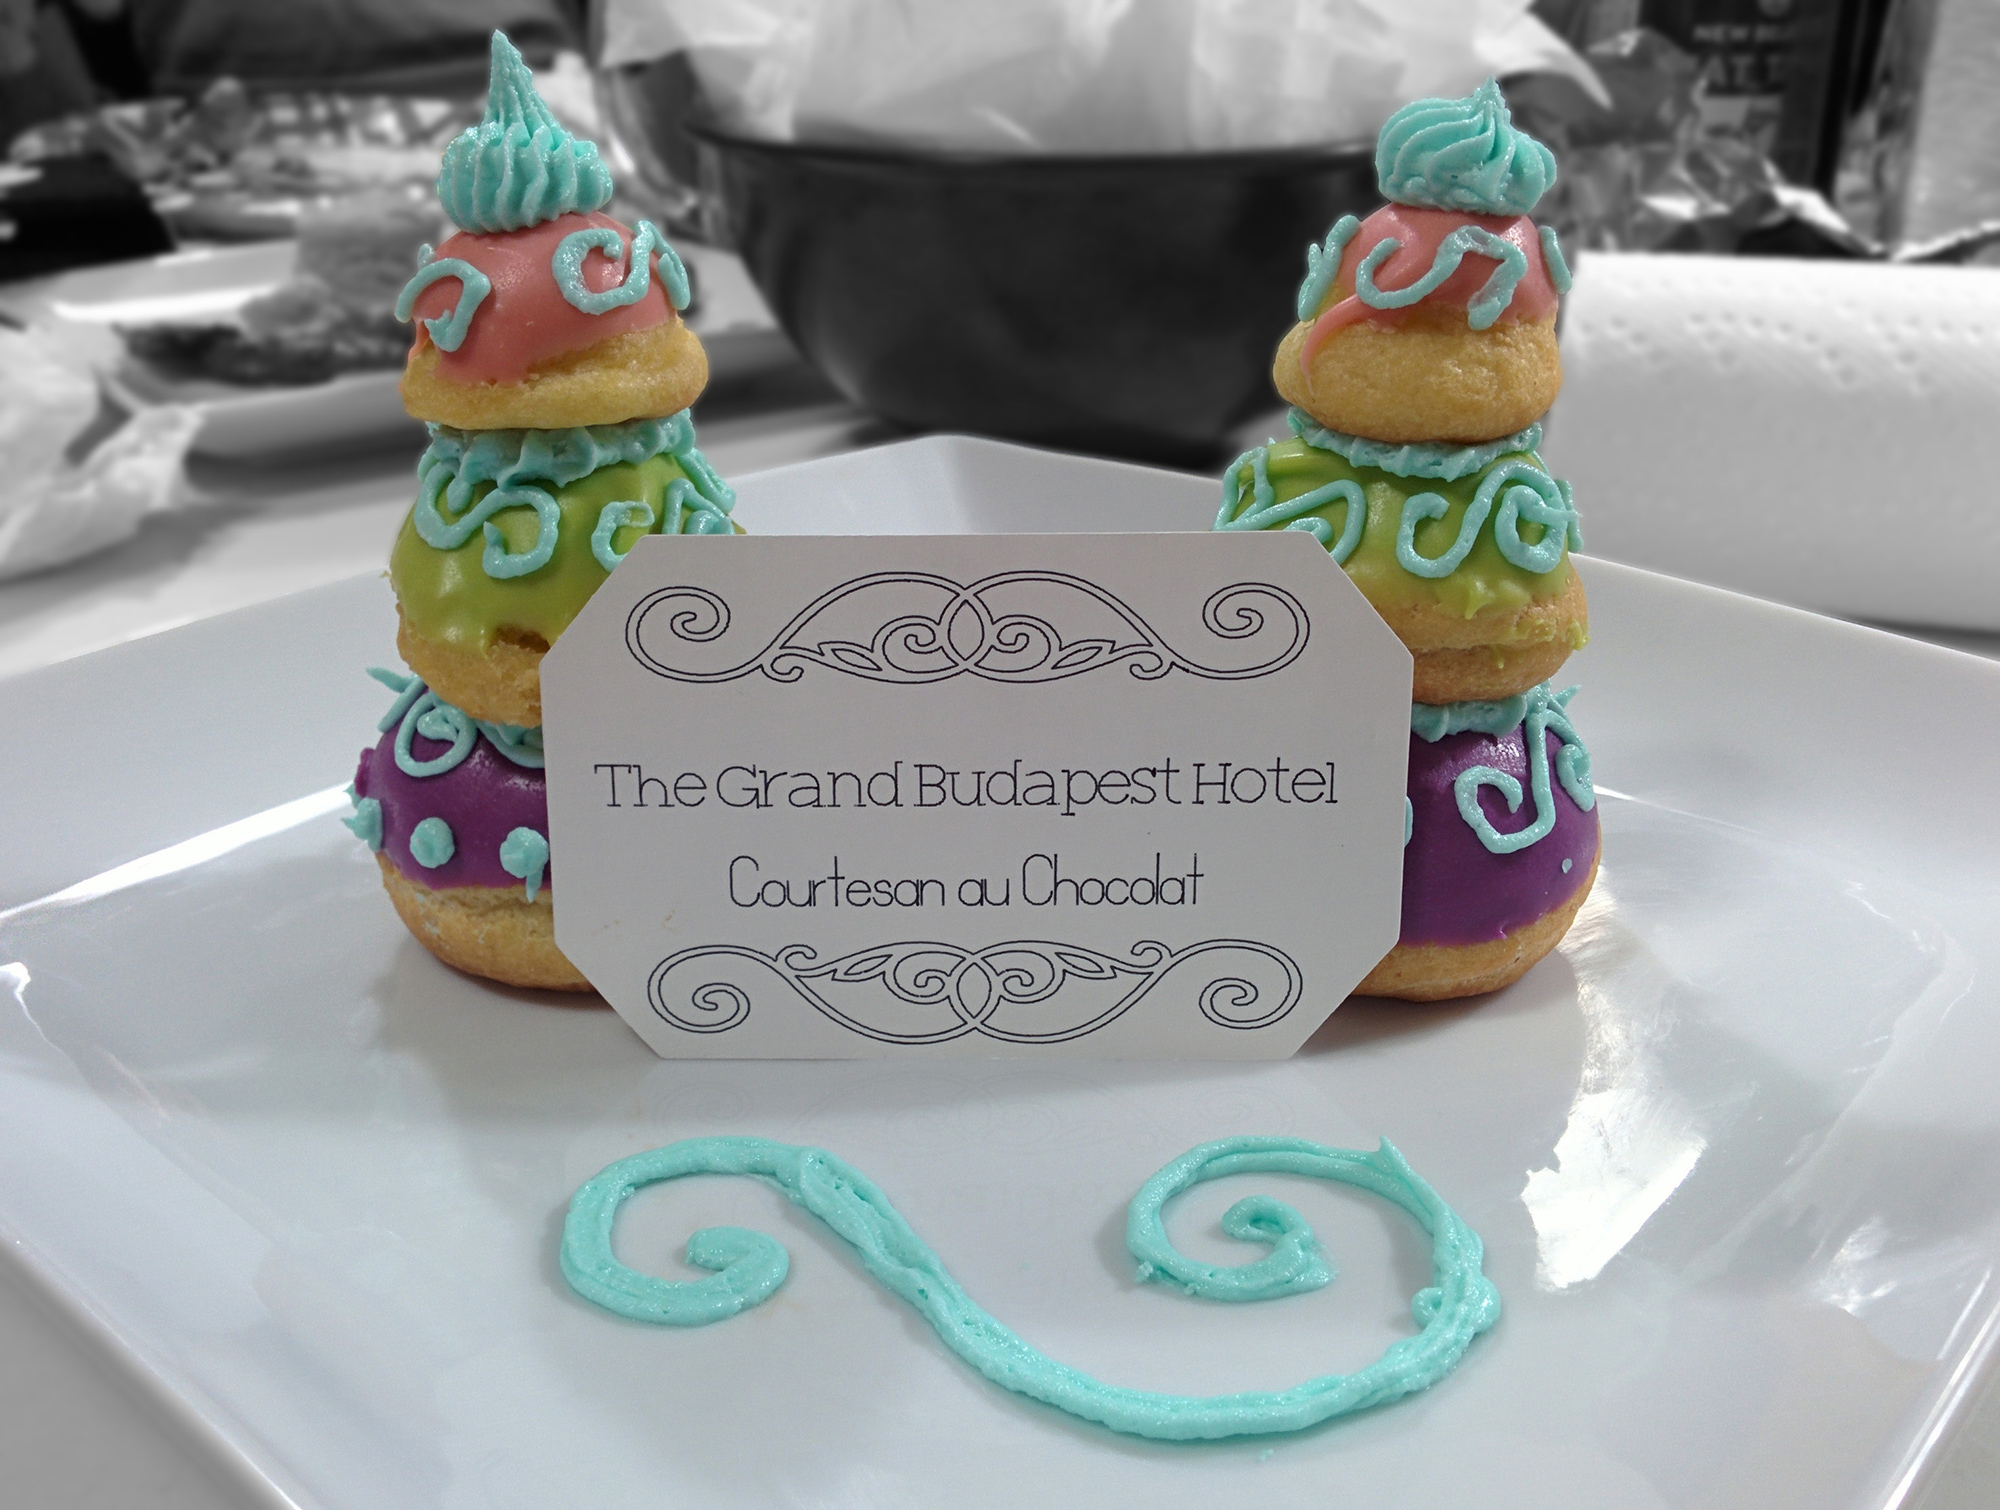 The Grand Budapest Hotel - Courtesan au Chocolat